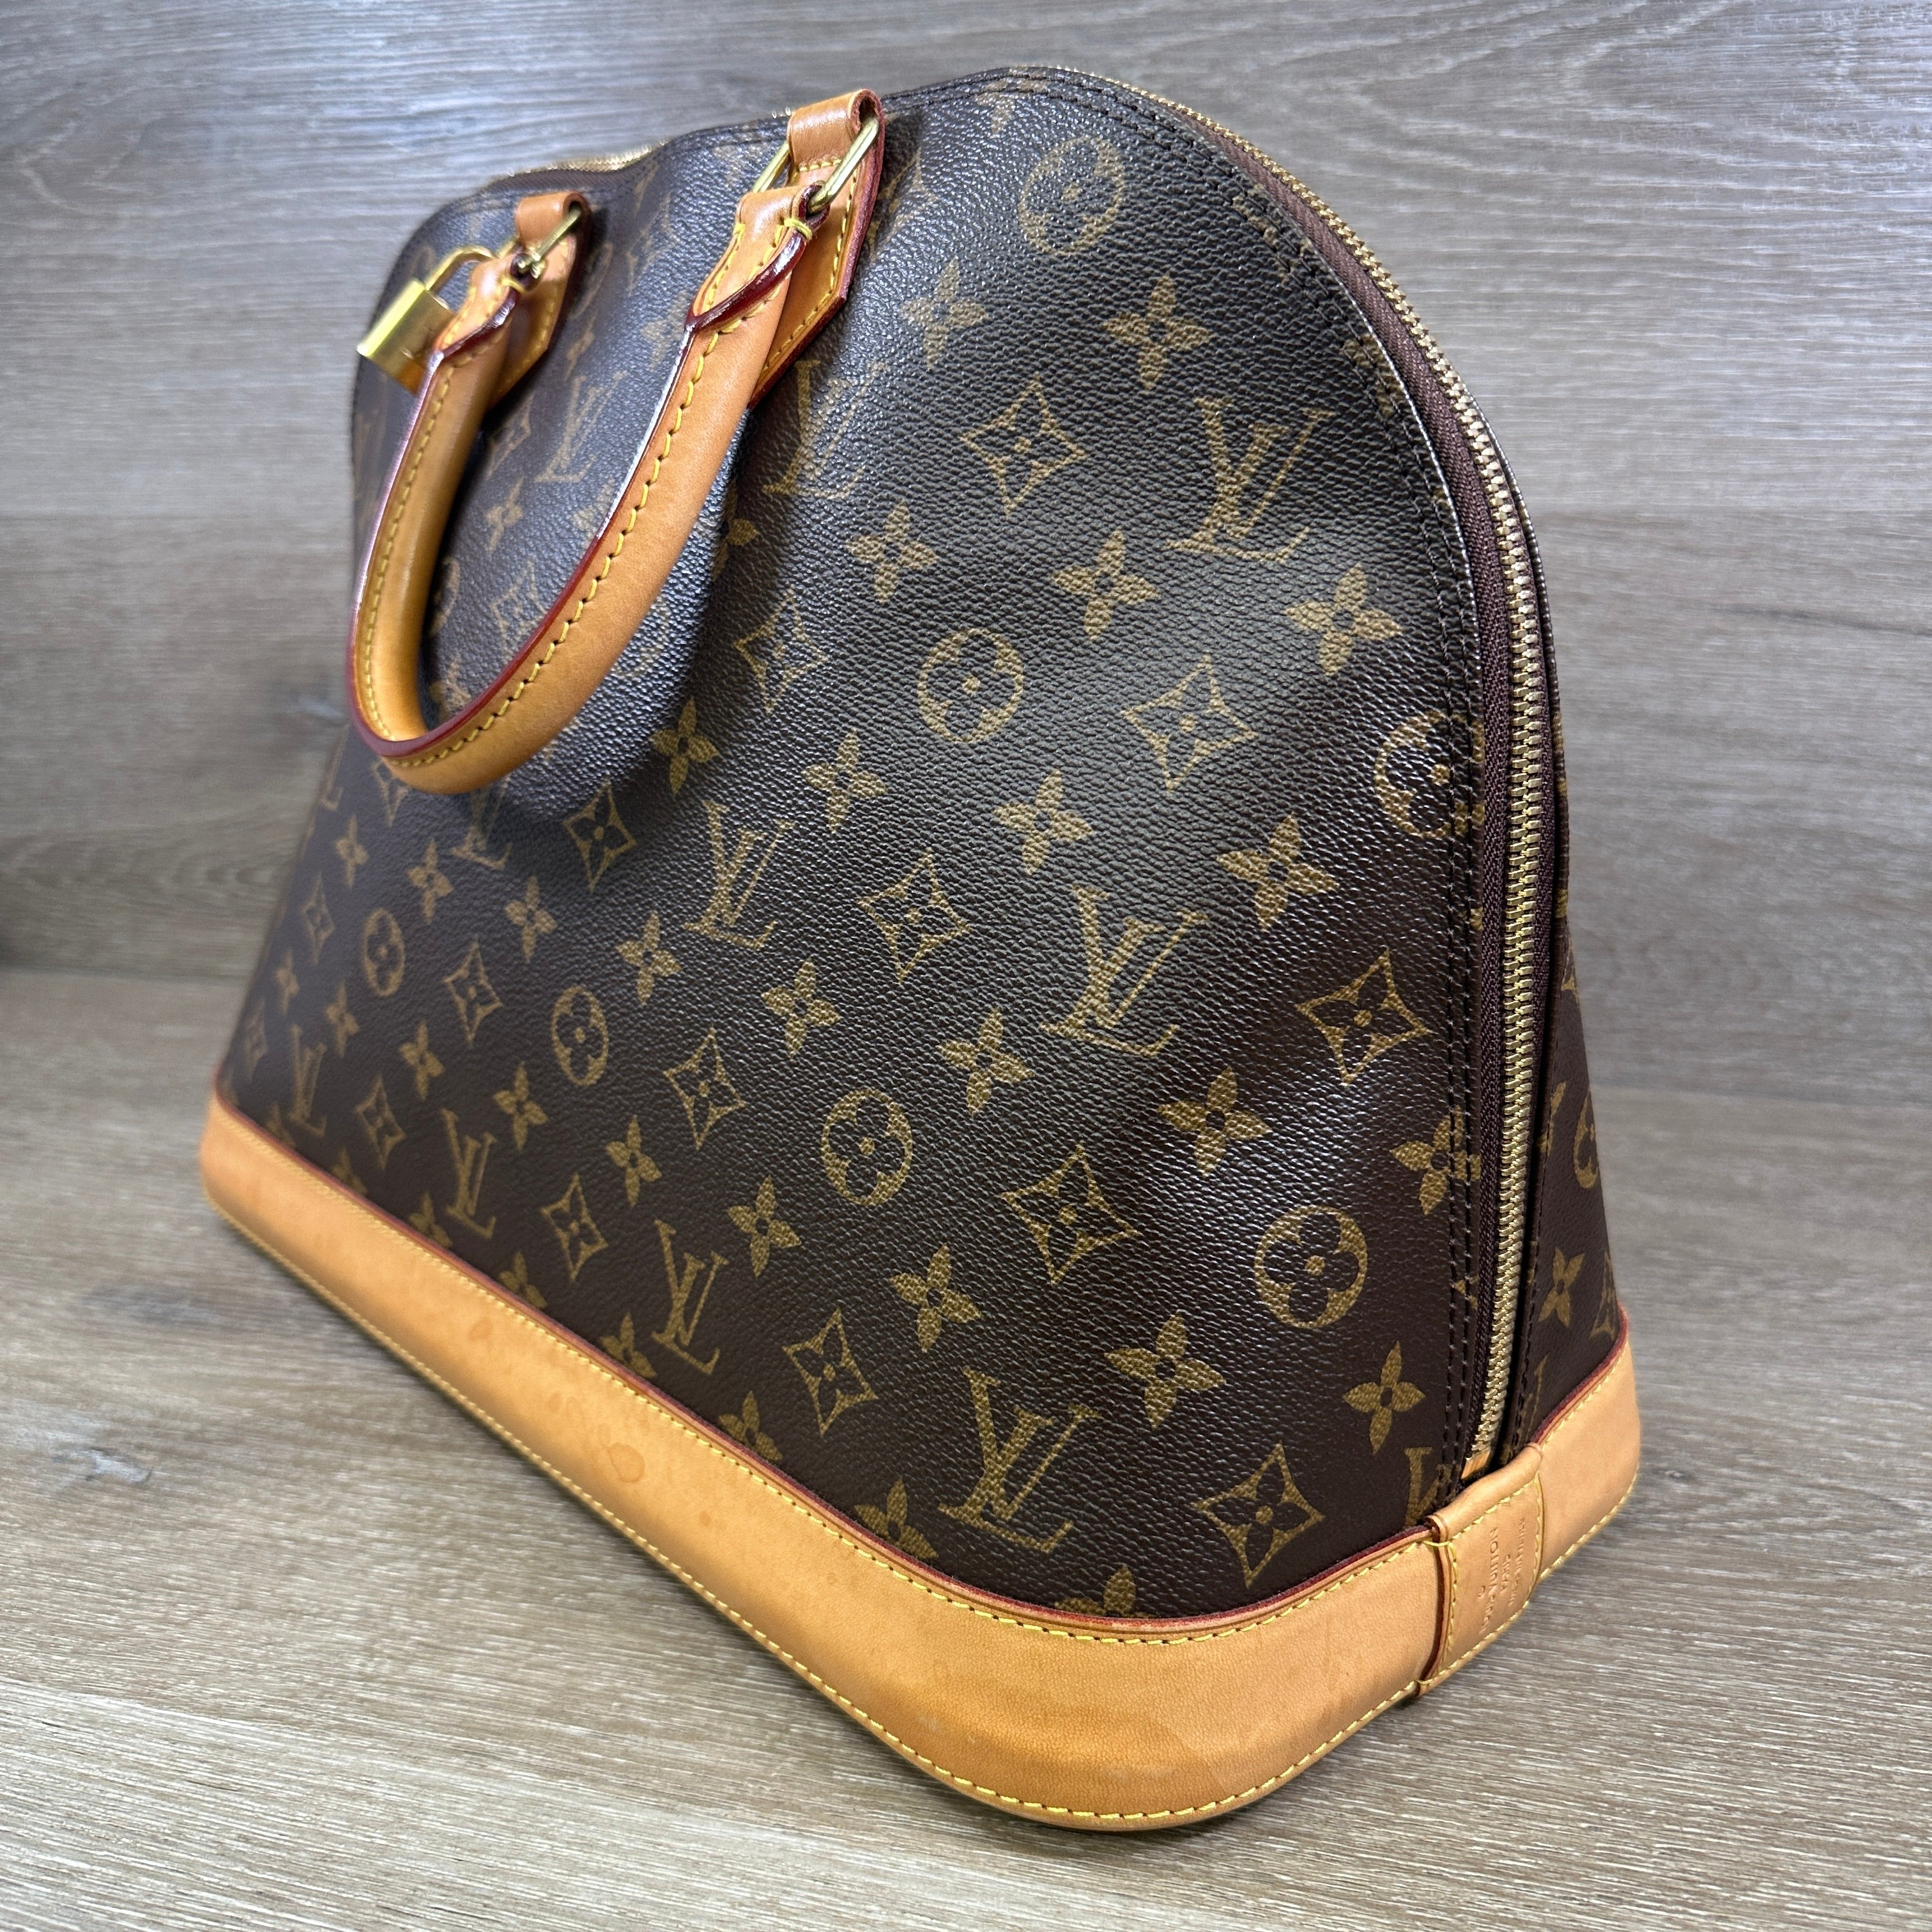 Louis Vuitton Vintage Alma Handbag